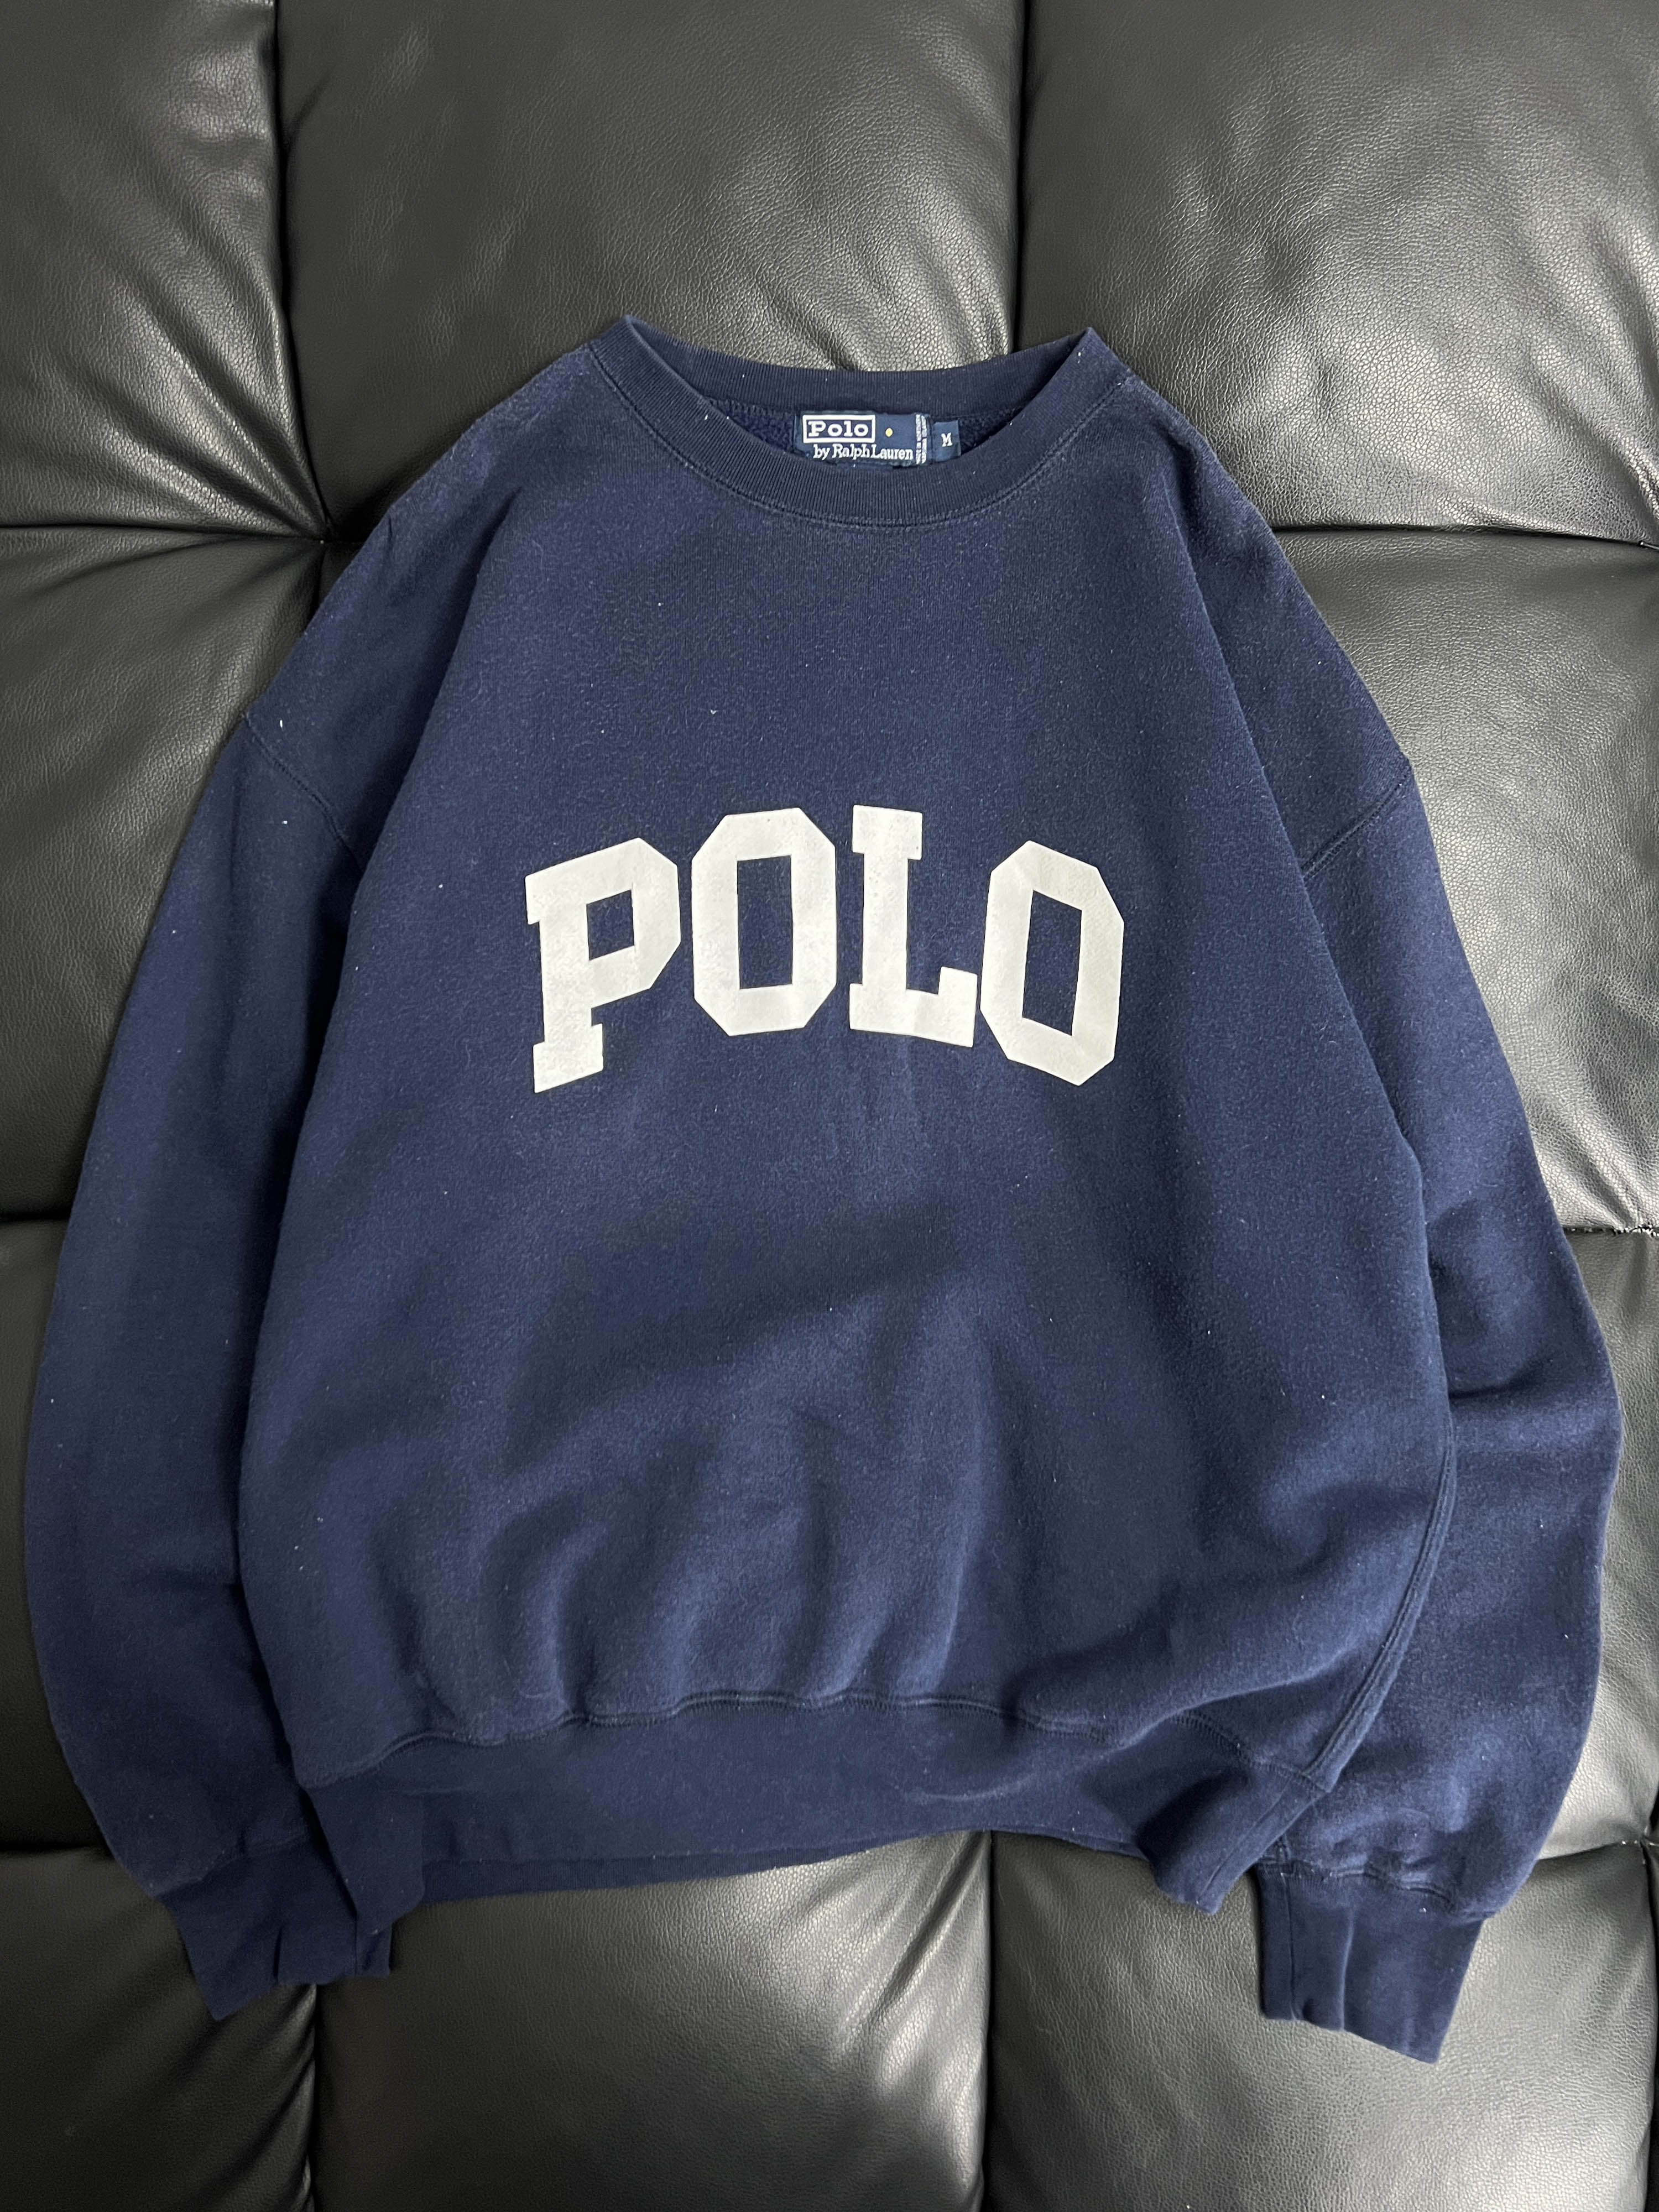 Polo Ralph lauren sweatshirts